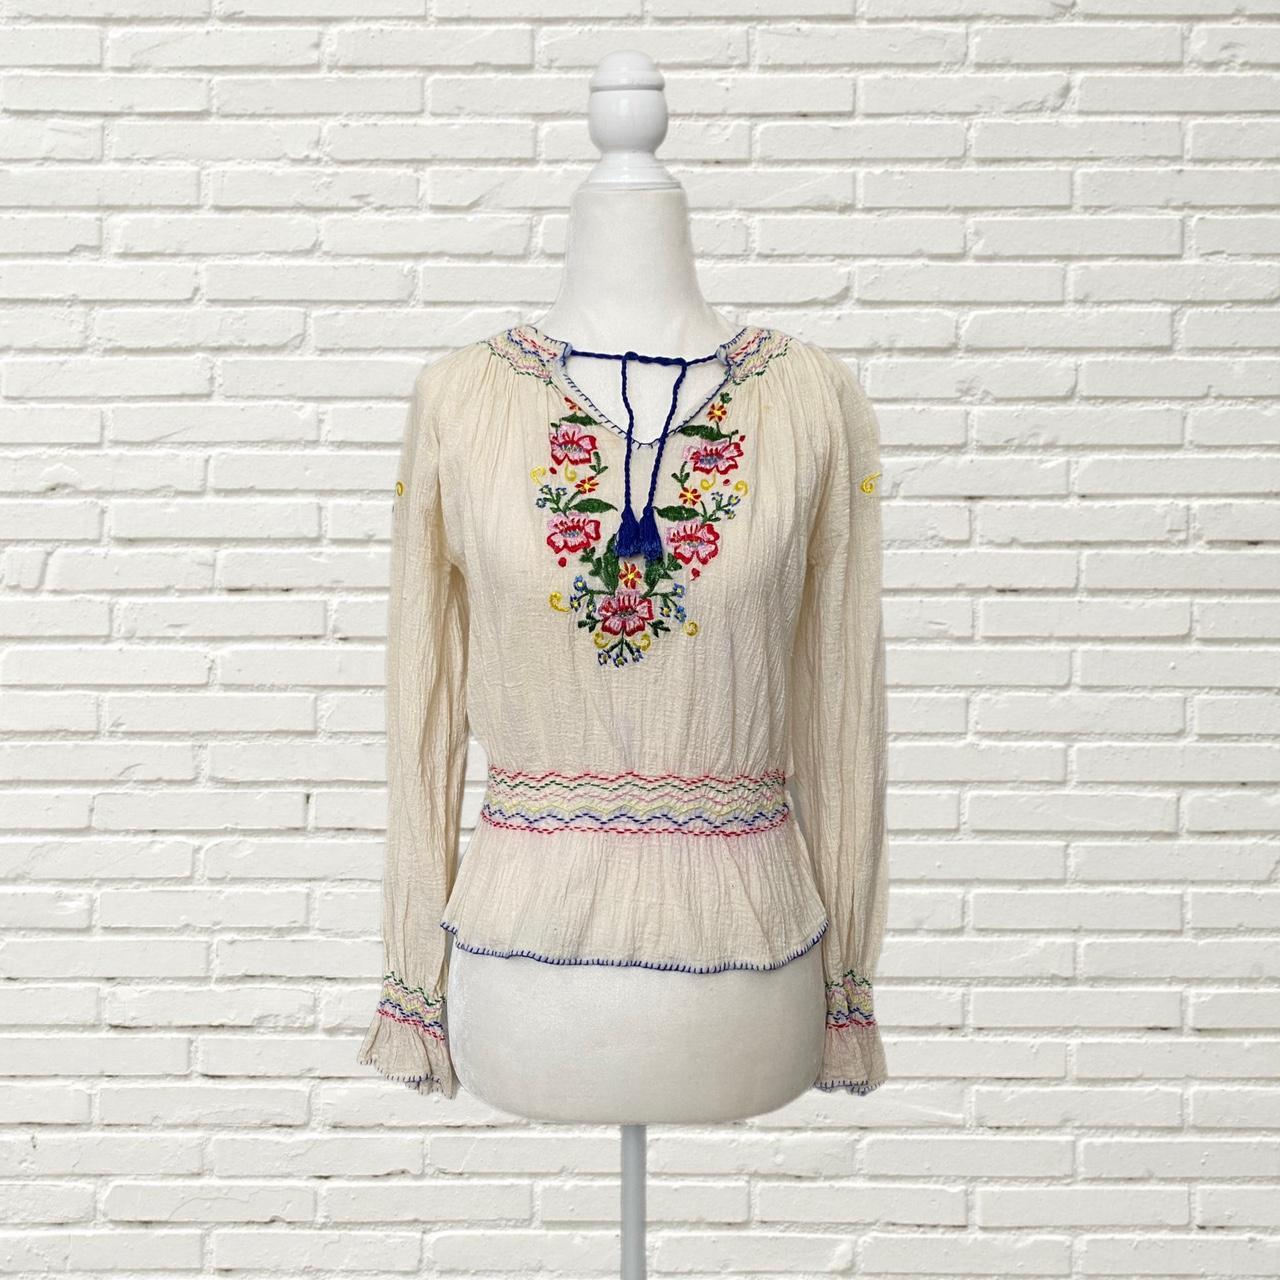 Vintage s Indian Cotton Gauze Embroidered Top   Depop